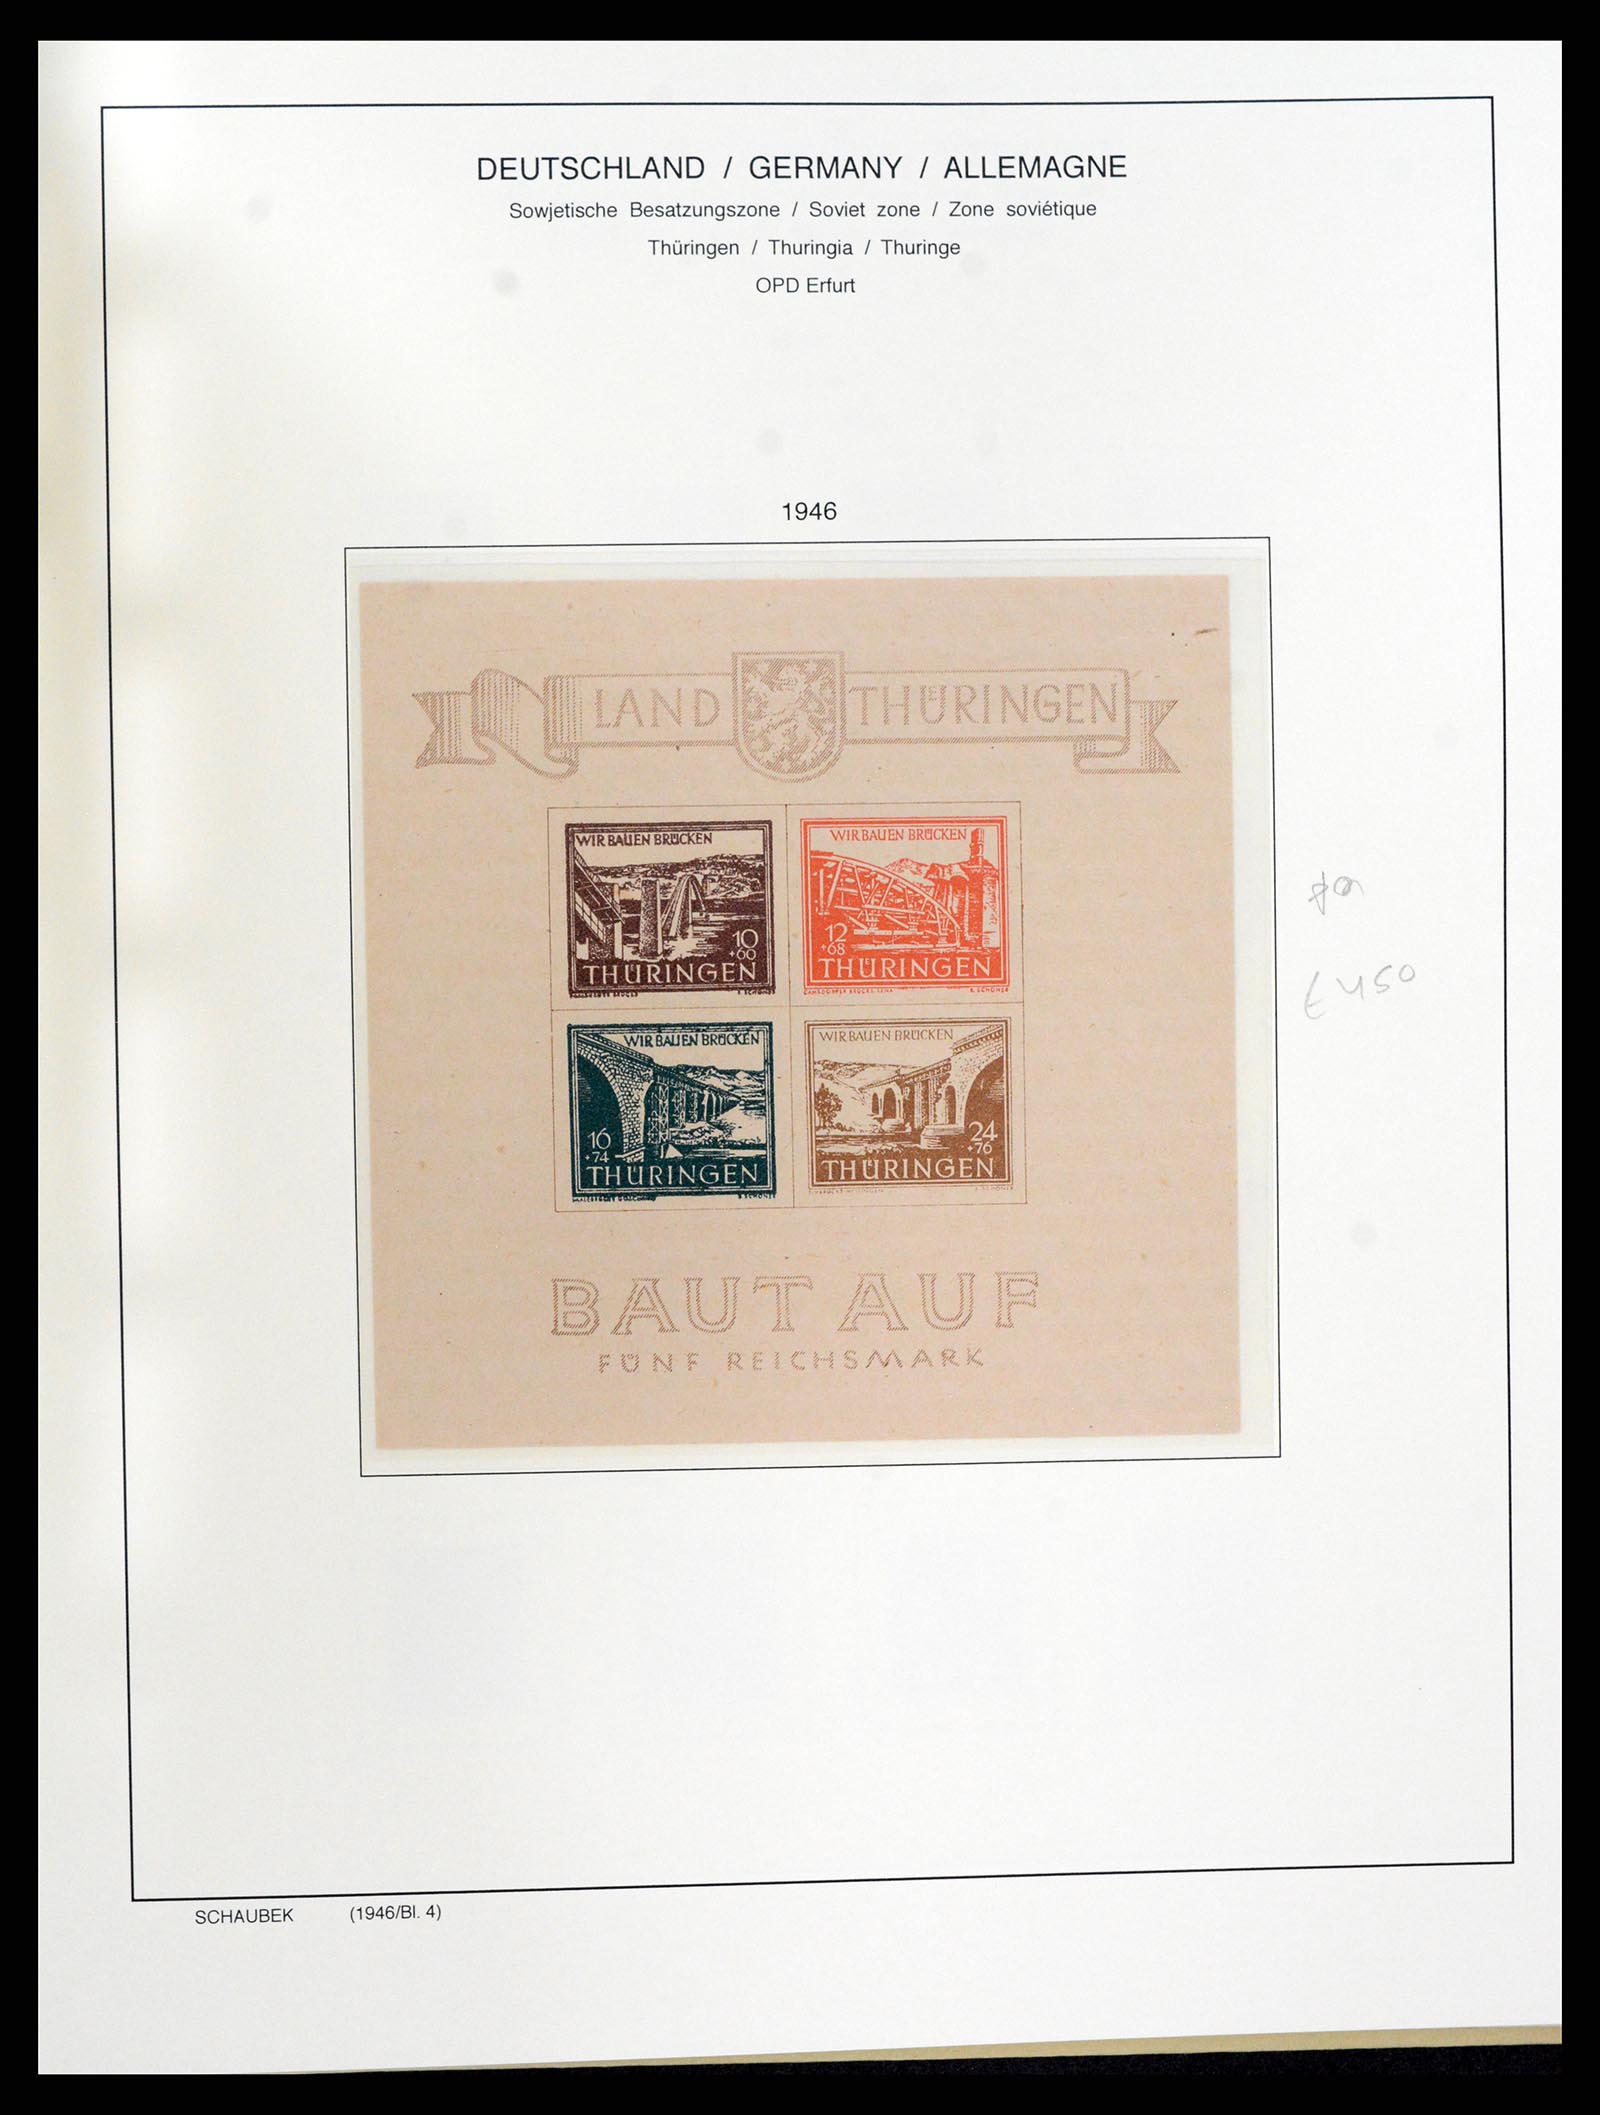 37645 036 - Stamp collection 37645 German Zones 1945-1949.